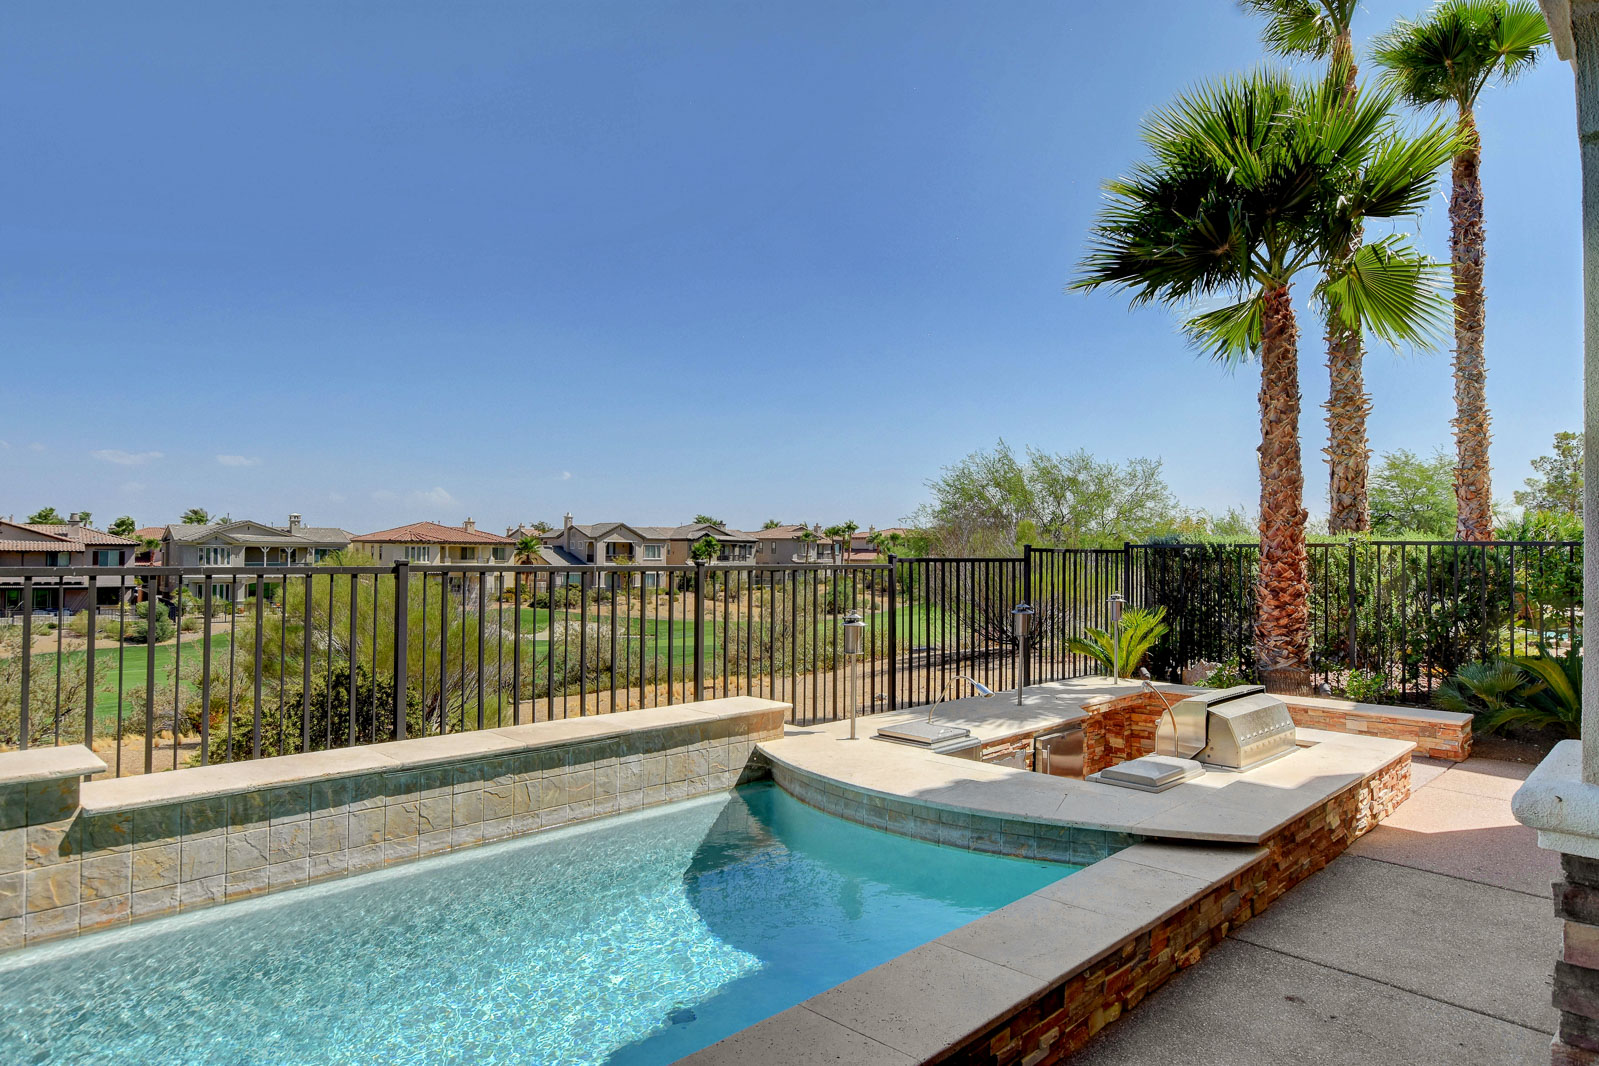 Property Management Las Vegas Pool